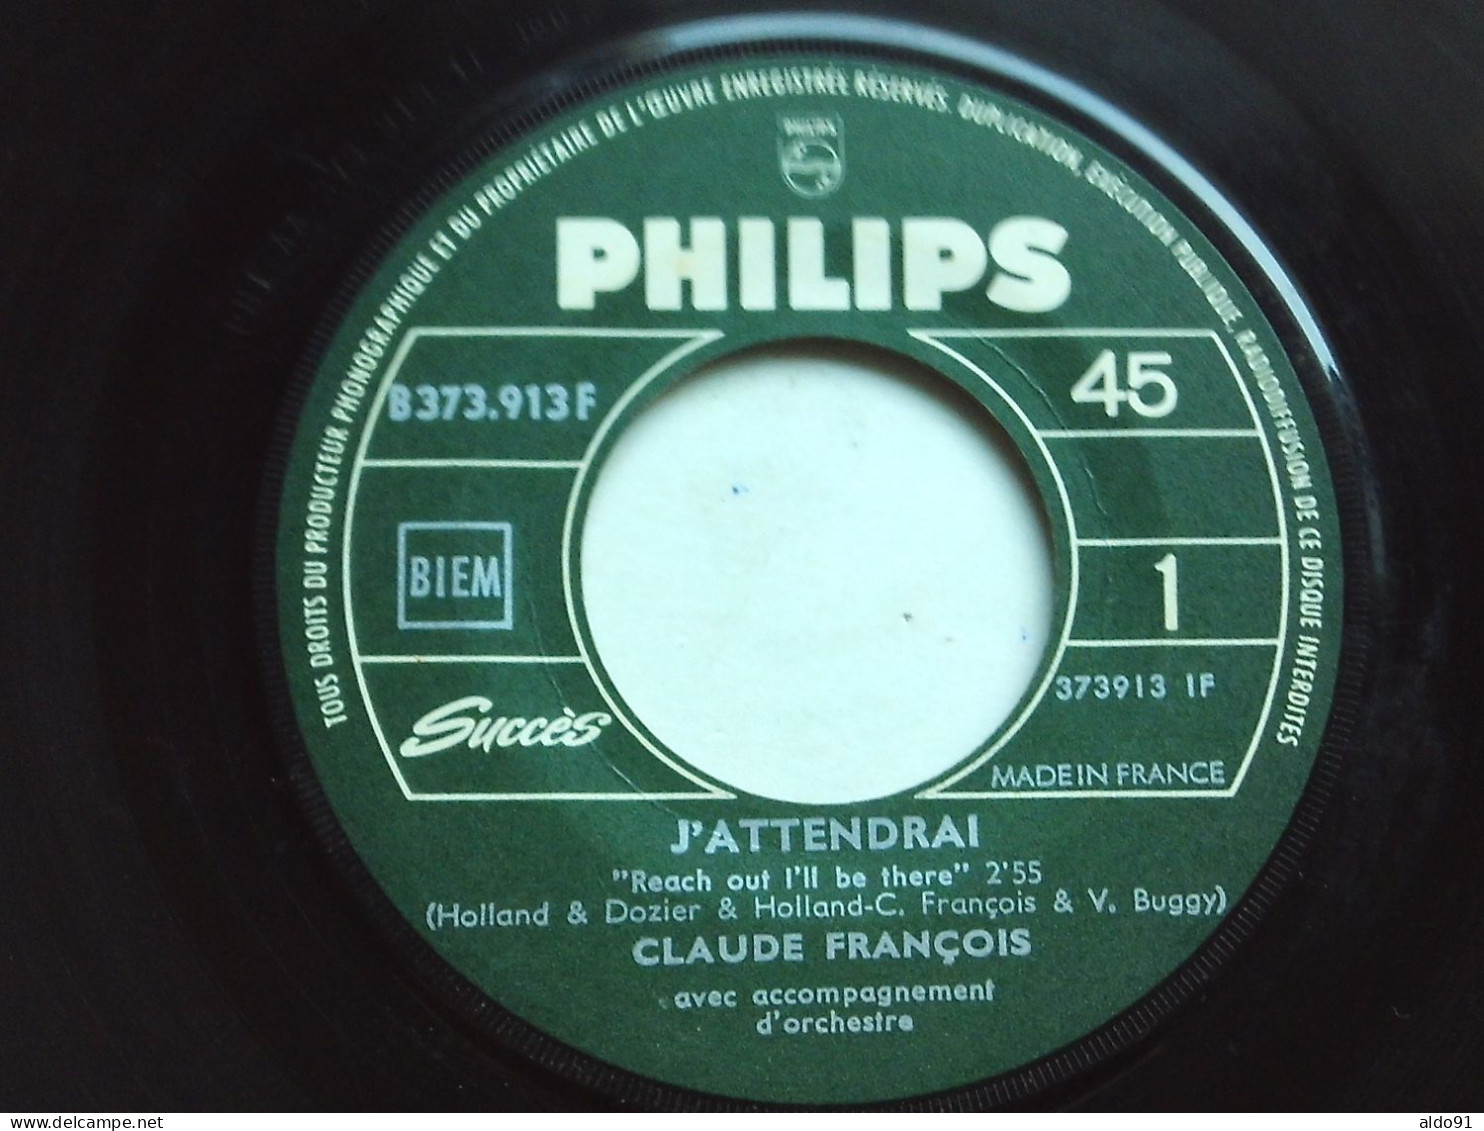 (Claude Francois - 1966) - Disque PHILIPS - B 373.913 F - 2 Titres  " J'attendrai Et Miss Felicity Gray " - Otros - Canción Francesa